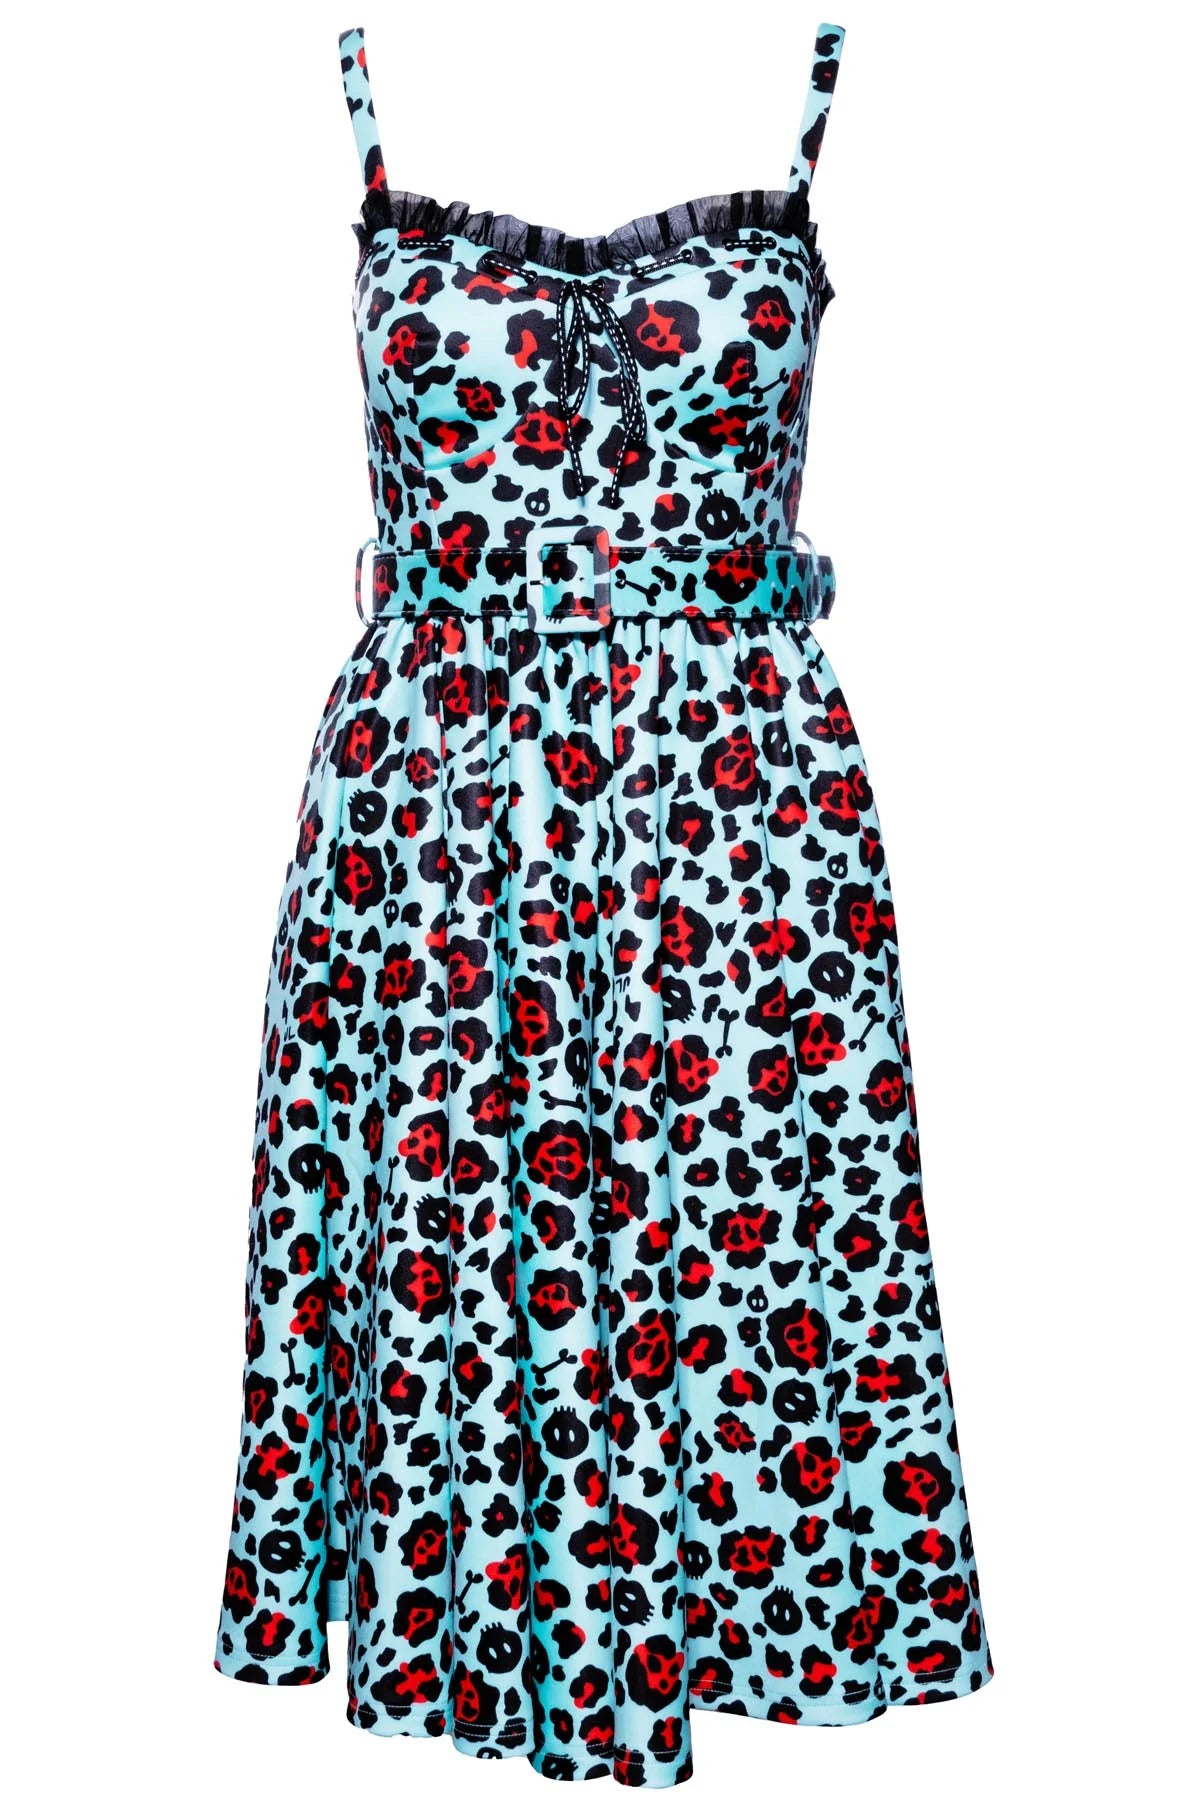 PRE-ORDER Love Bites Swing Dress - Leopard Print